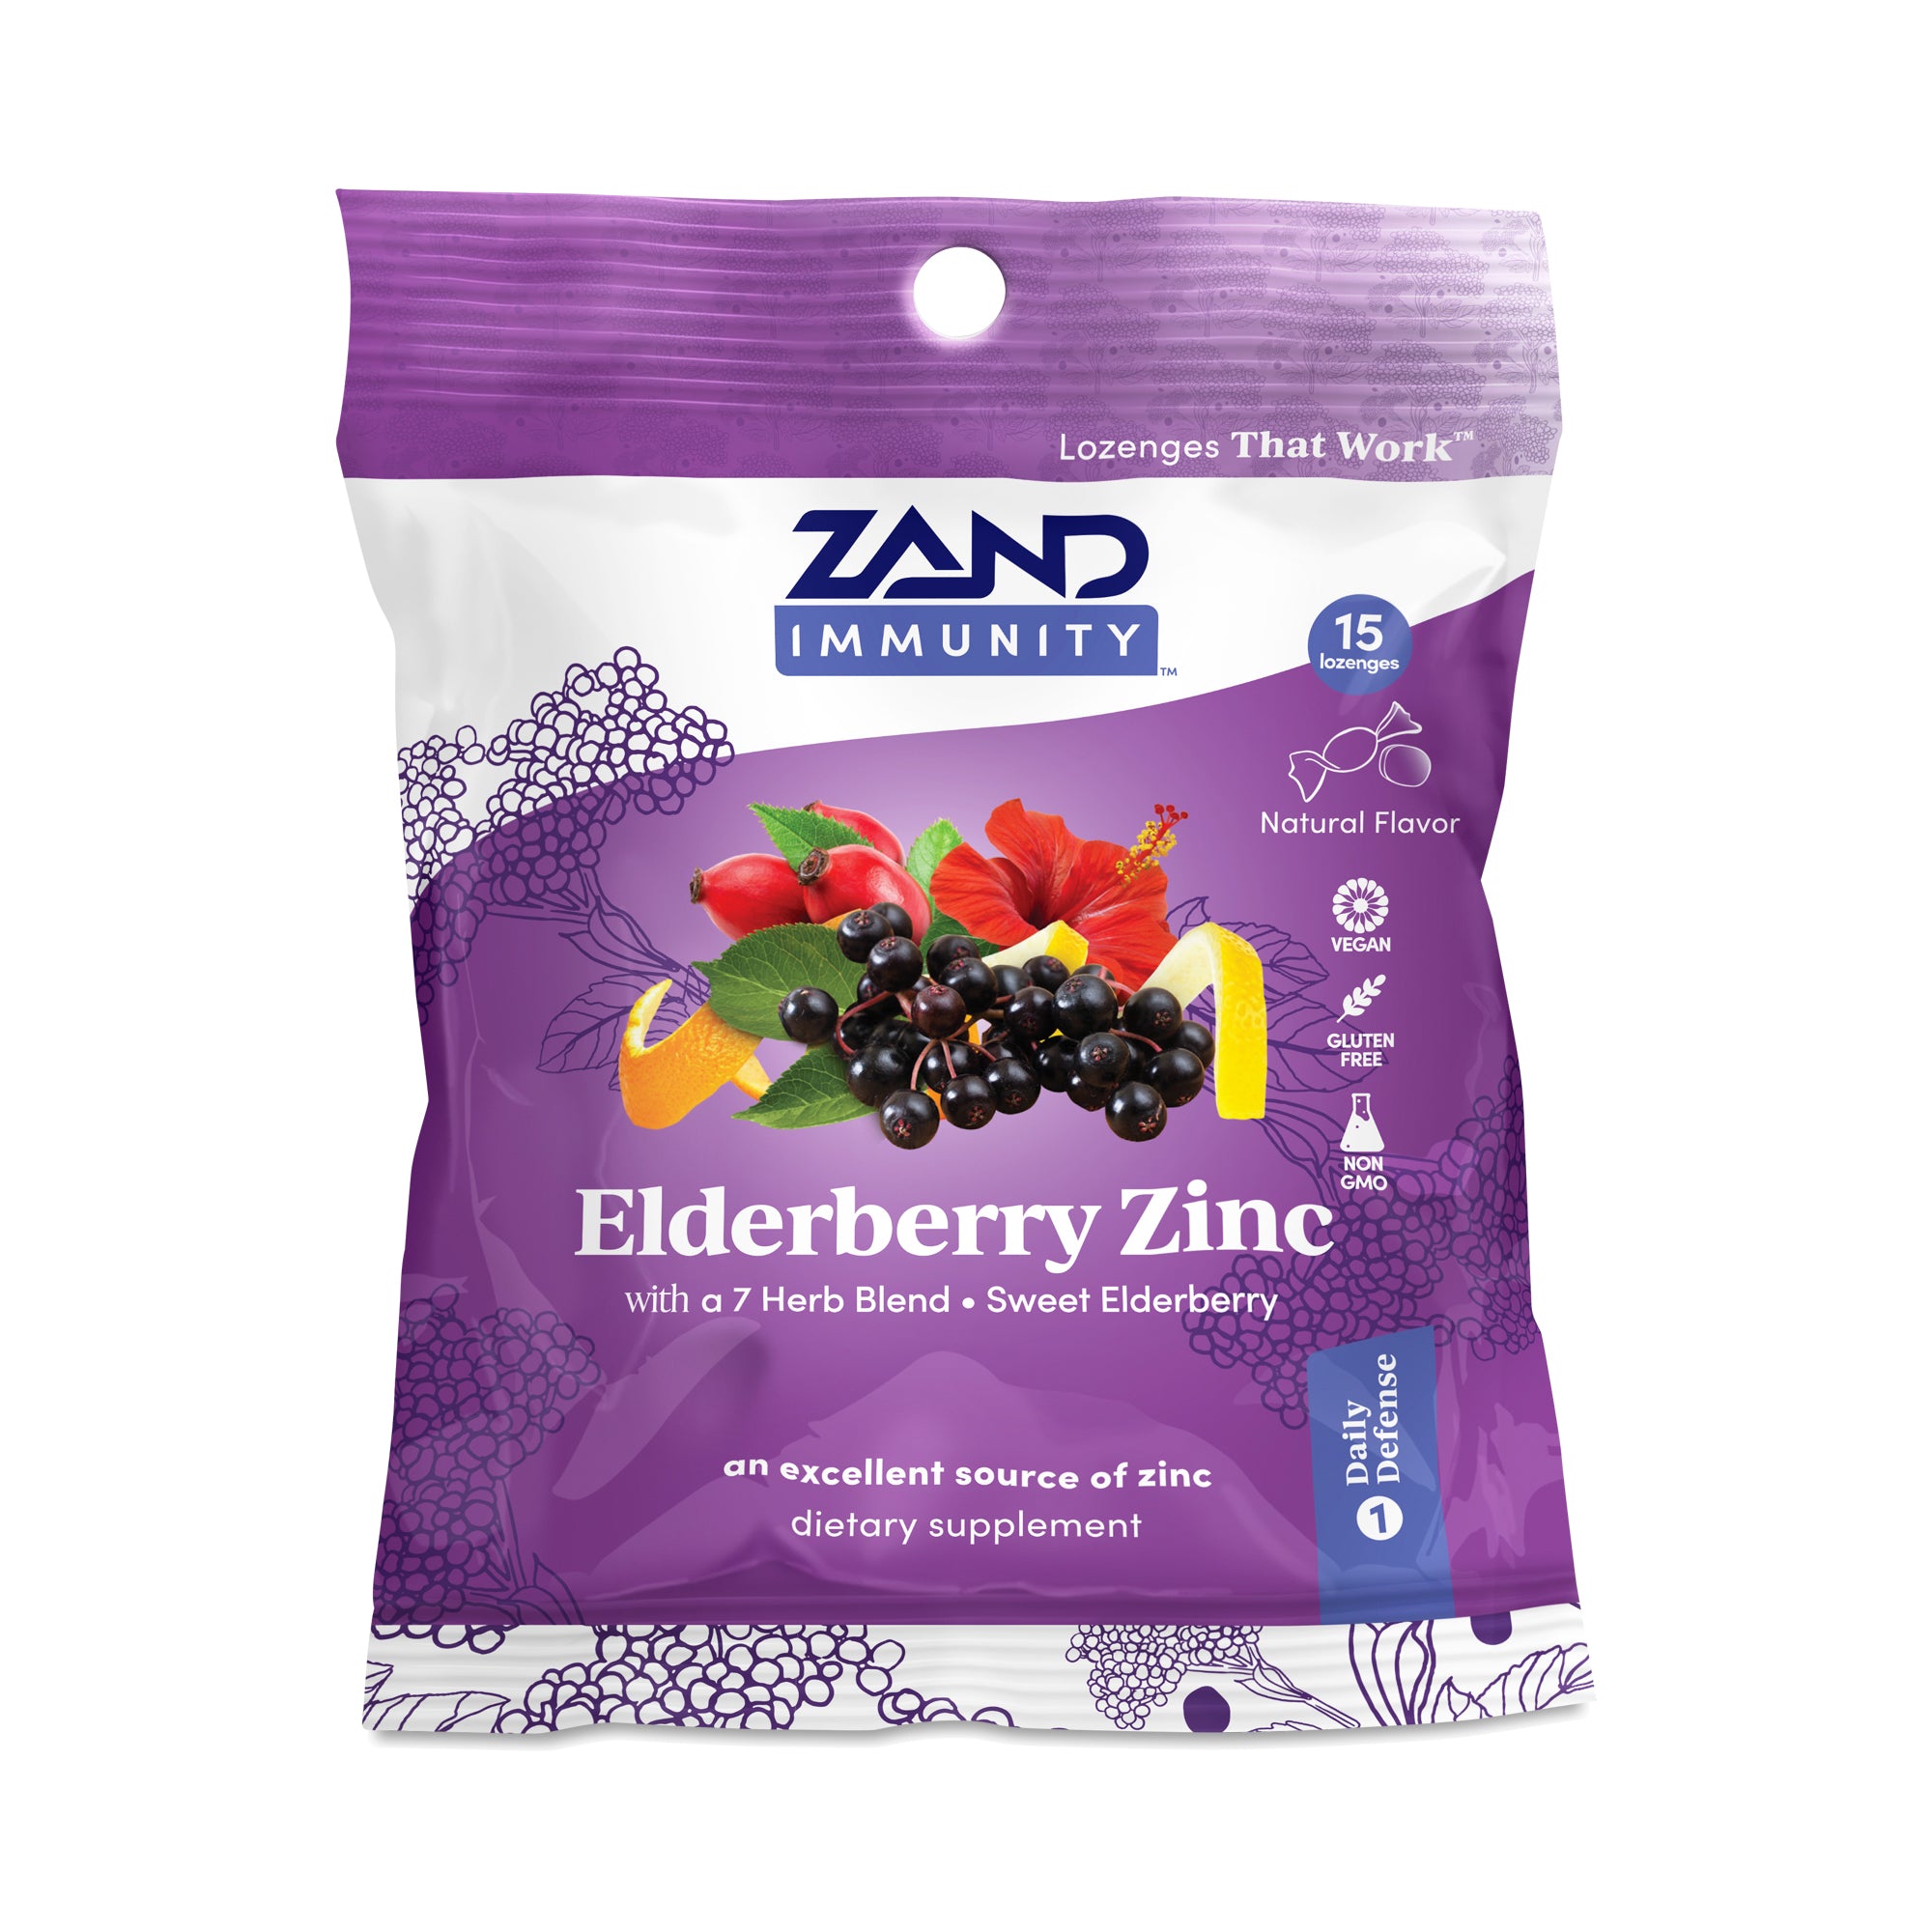 Zand Elderberry Zinc 15lz